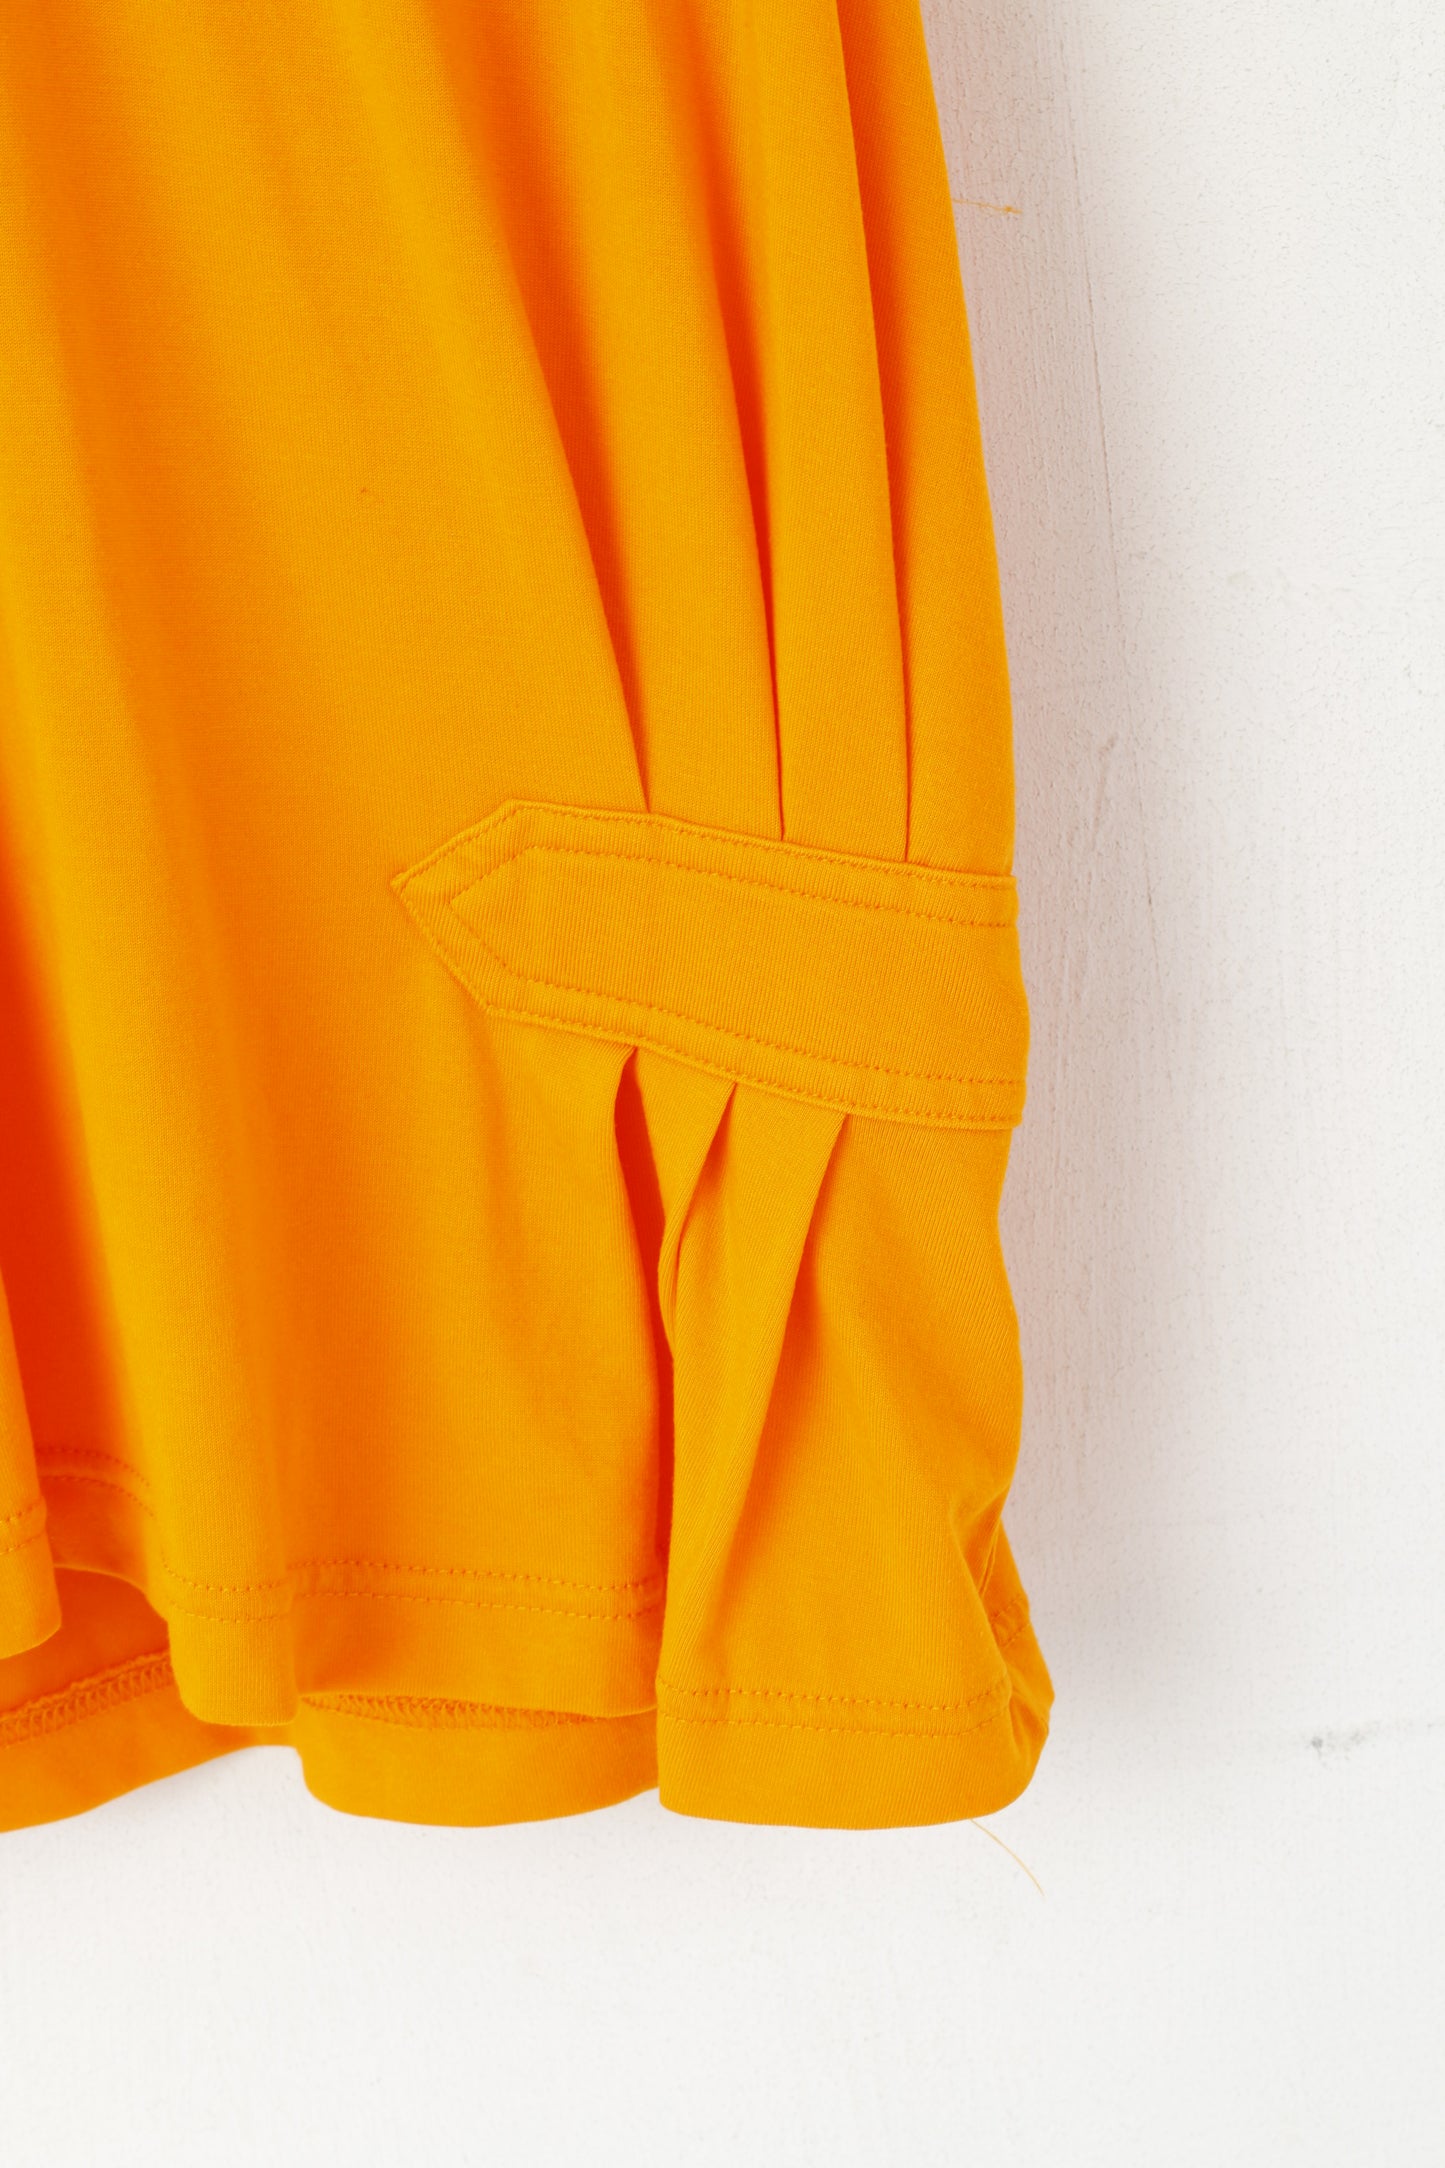 Adidas Stella McCartney Femme 38 S Chemise Orange Coton Sport Gym Débardeur